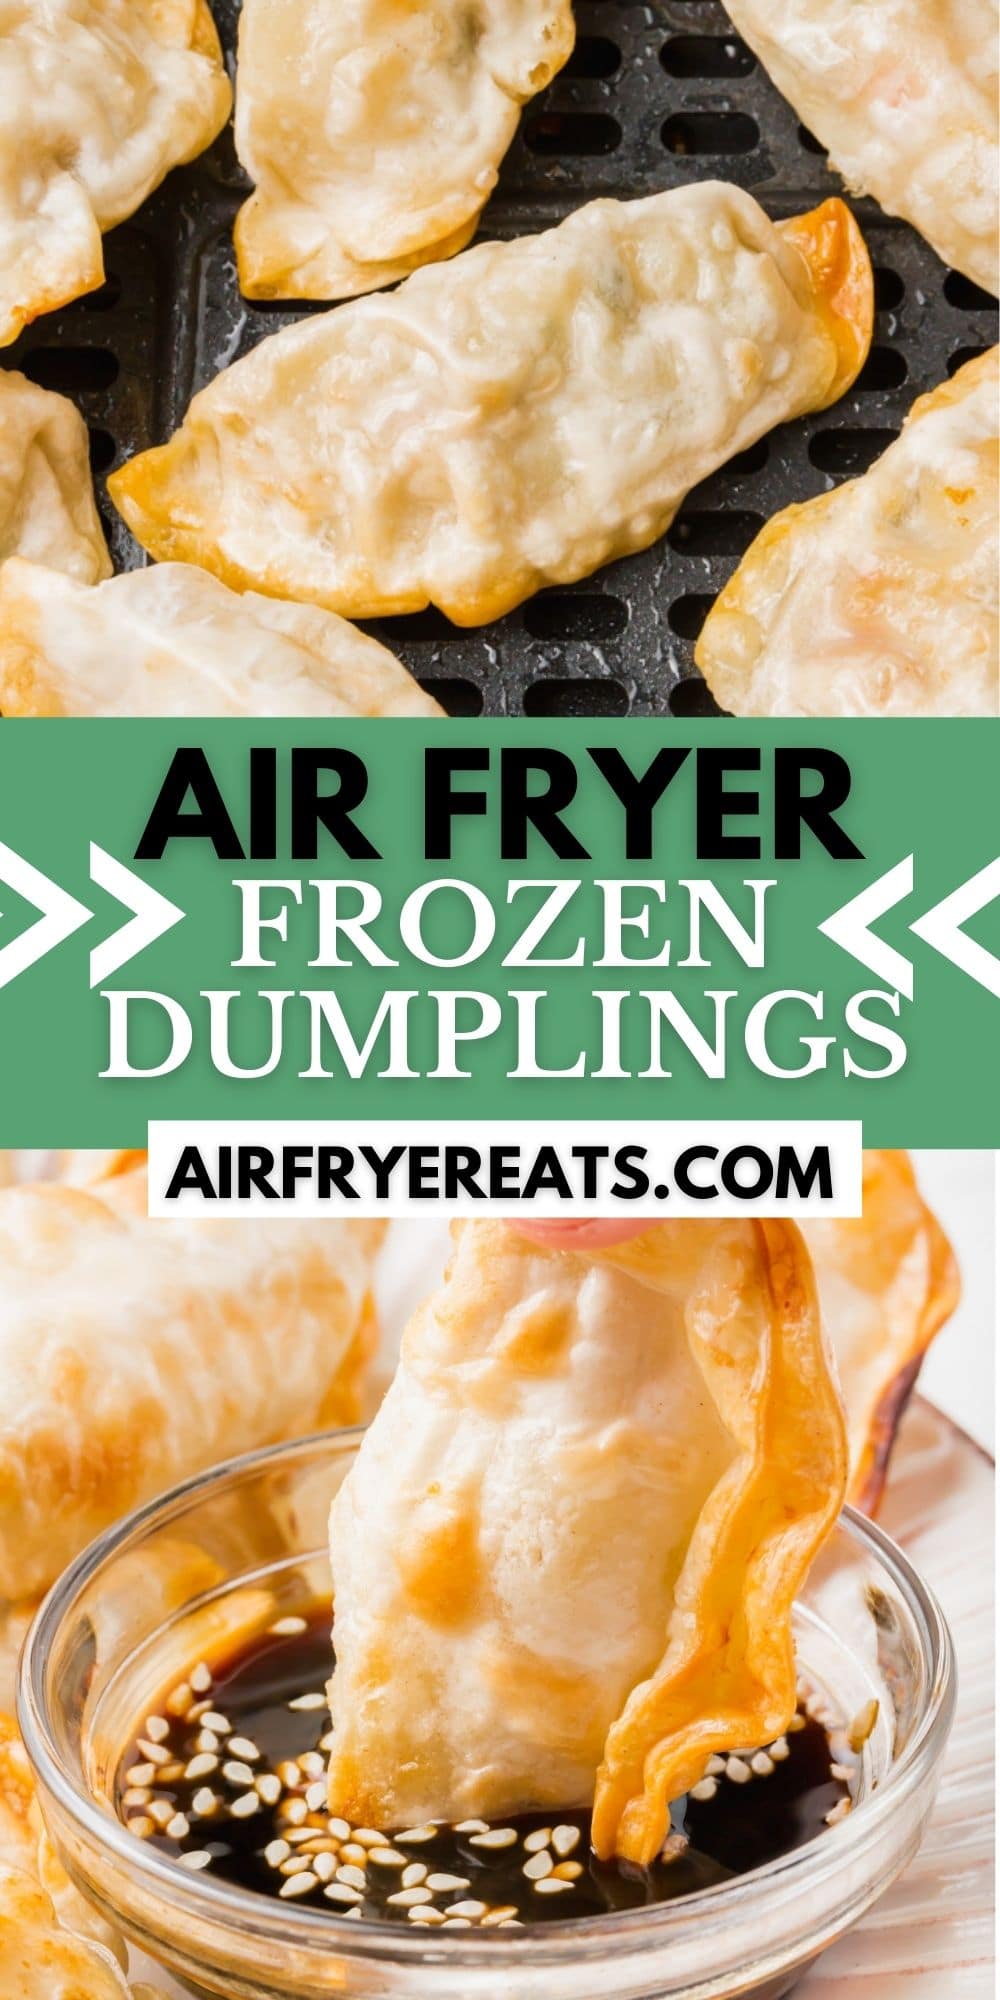 air fryer frozen dumplings pin image with text overlay